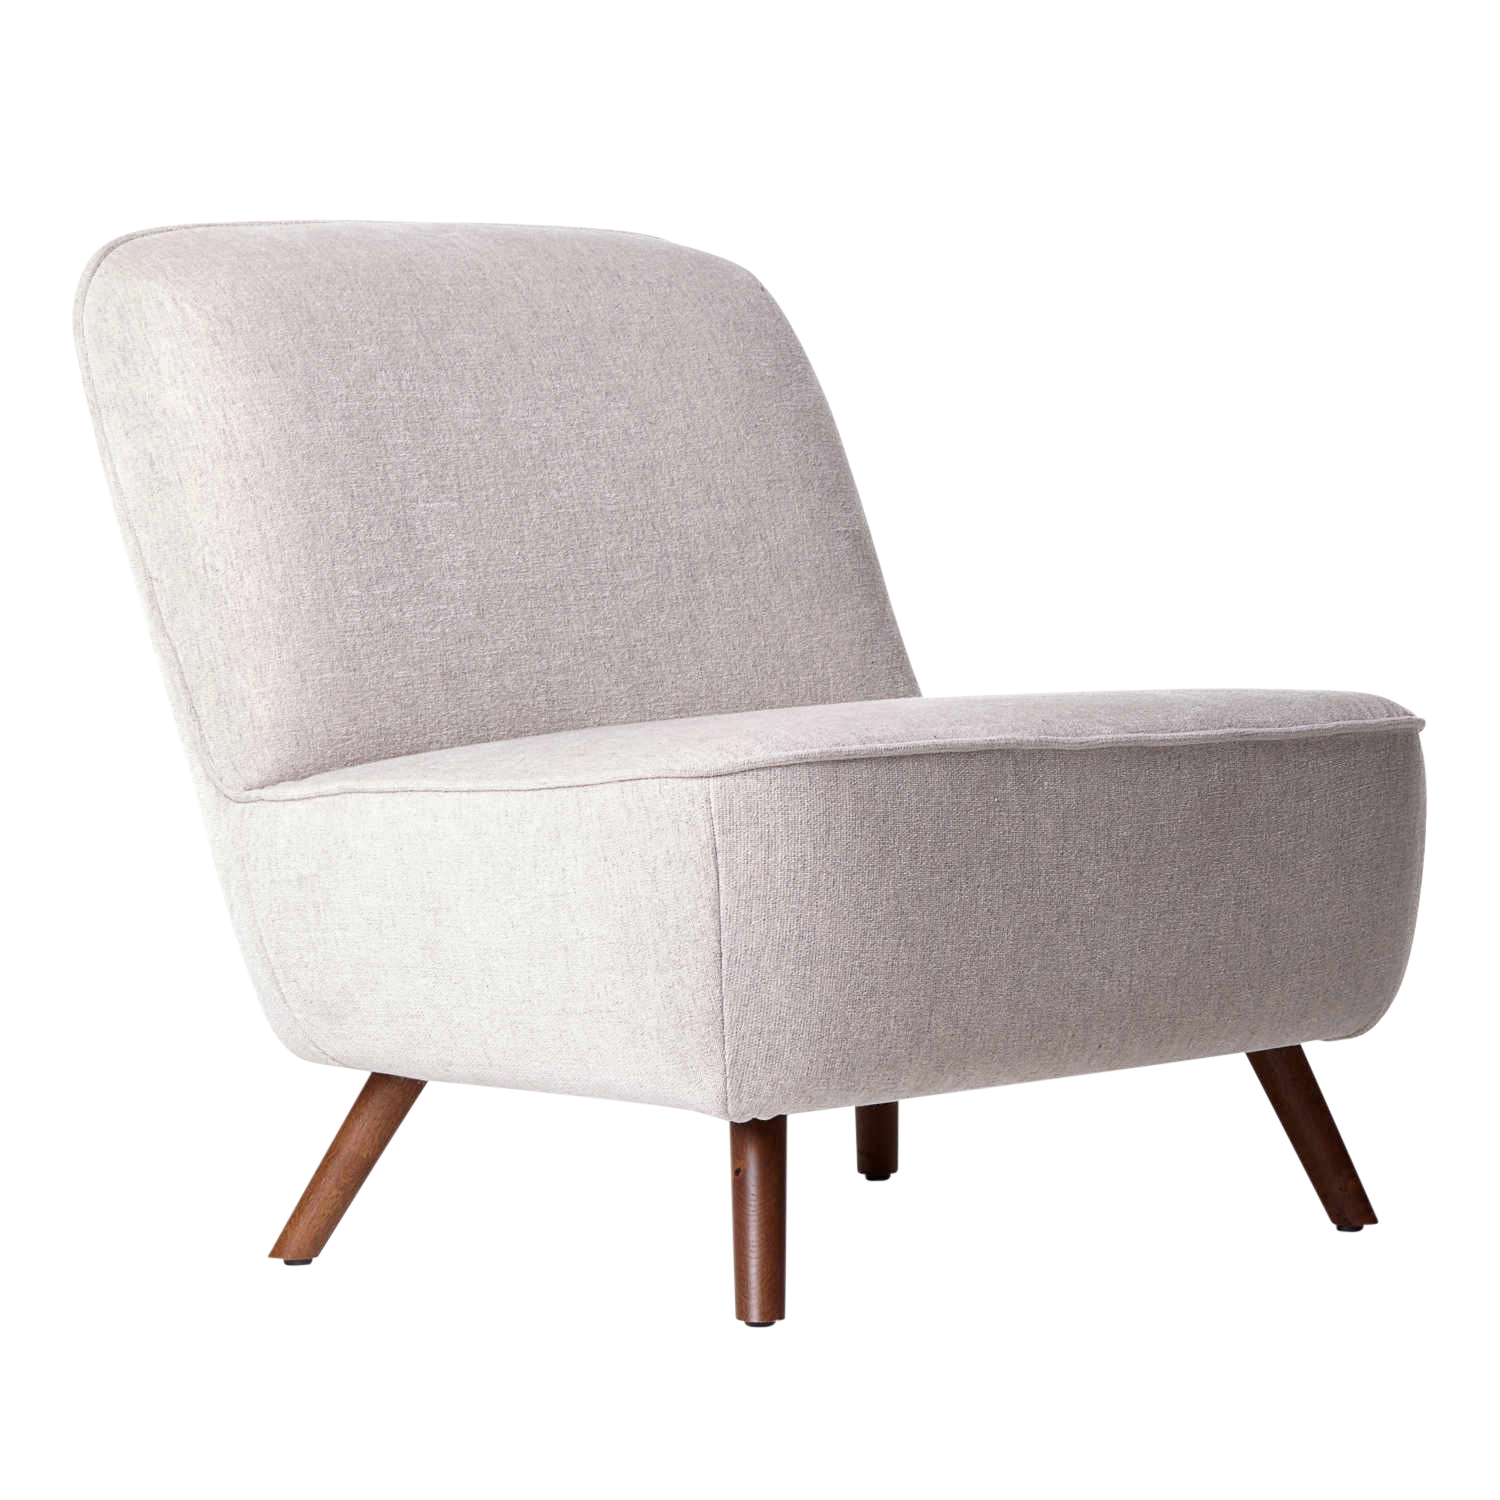 Cocktail Chair Sessel, Bezug stoff remix 0692, Untergestell wood stained white washed von Moooi